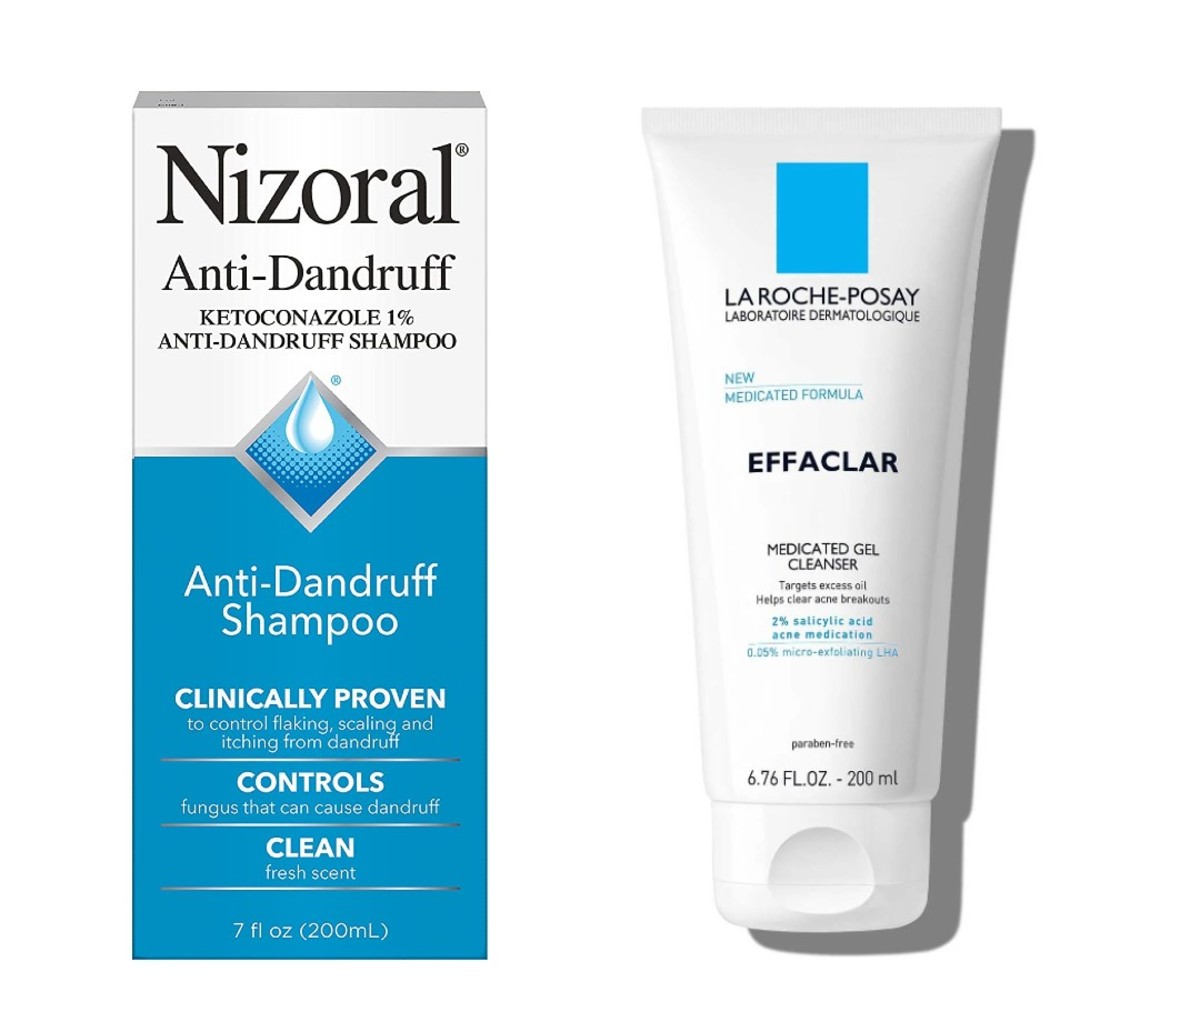 Nizoral Anti-Dandruff Shampoo with Ketoconaole and La Roche-Posay Effaclar Facial Cleanser with Salicylic Acid.